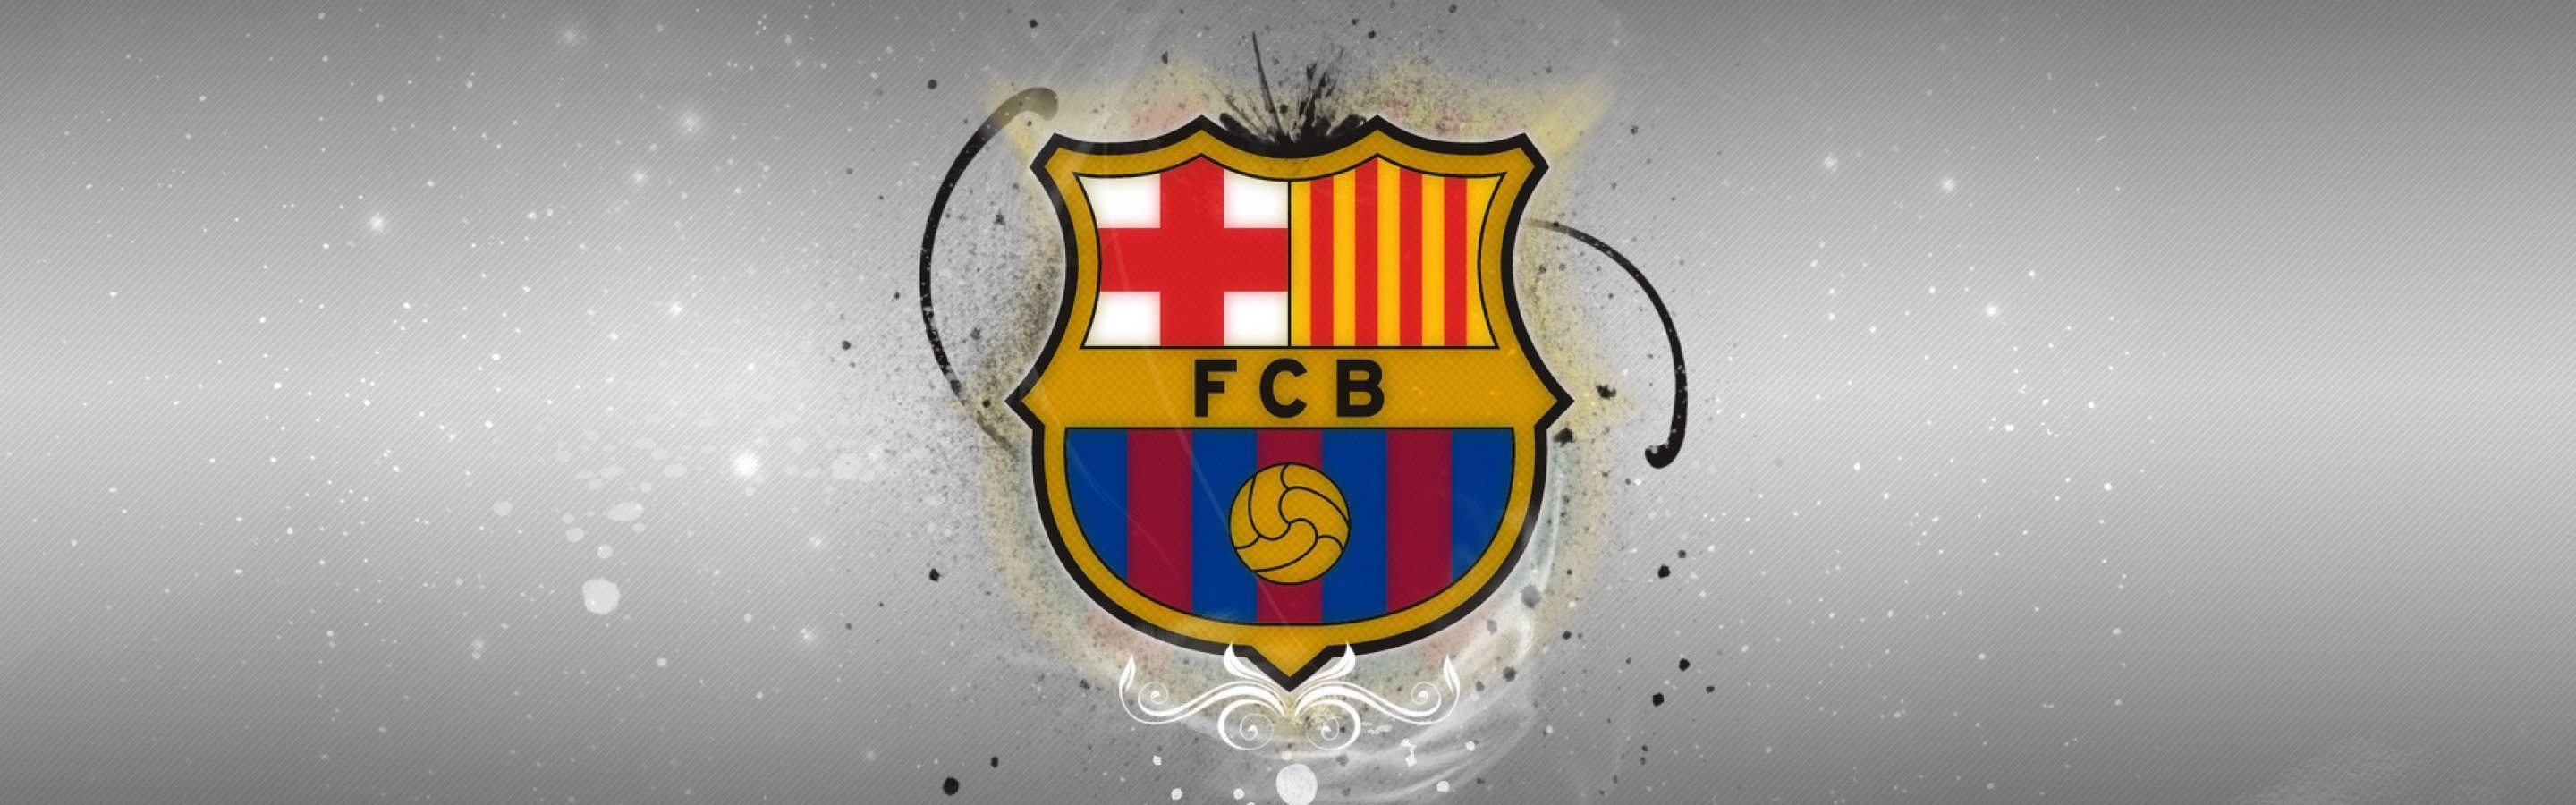 F.C. Barcelona Logo